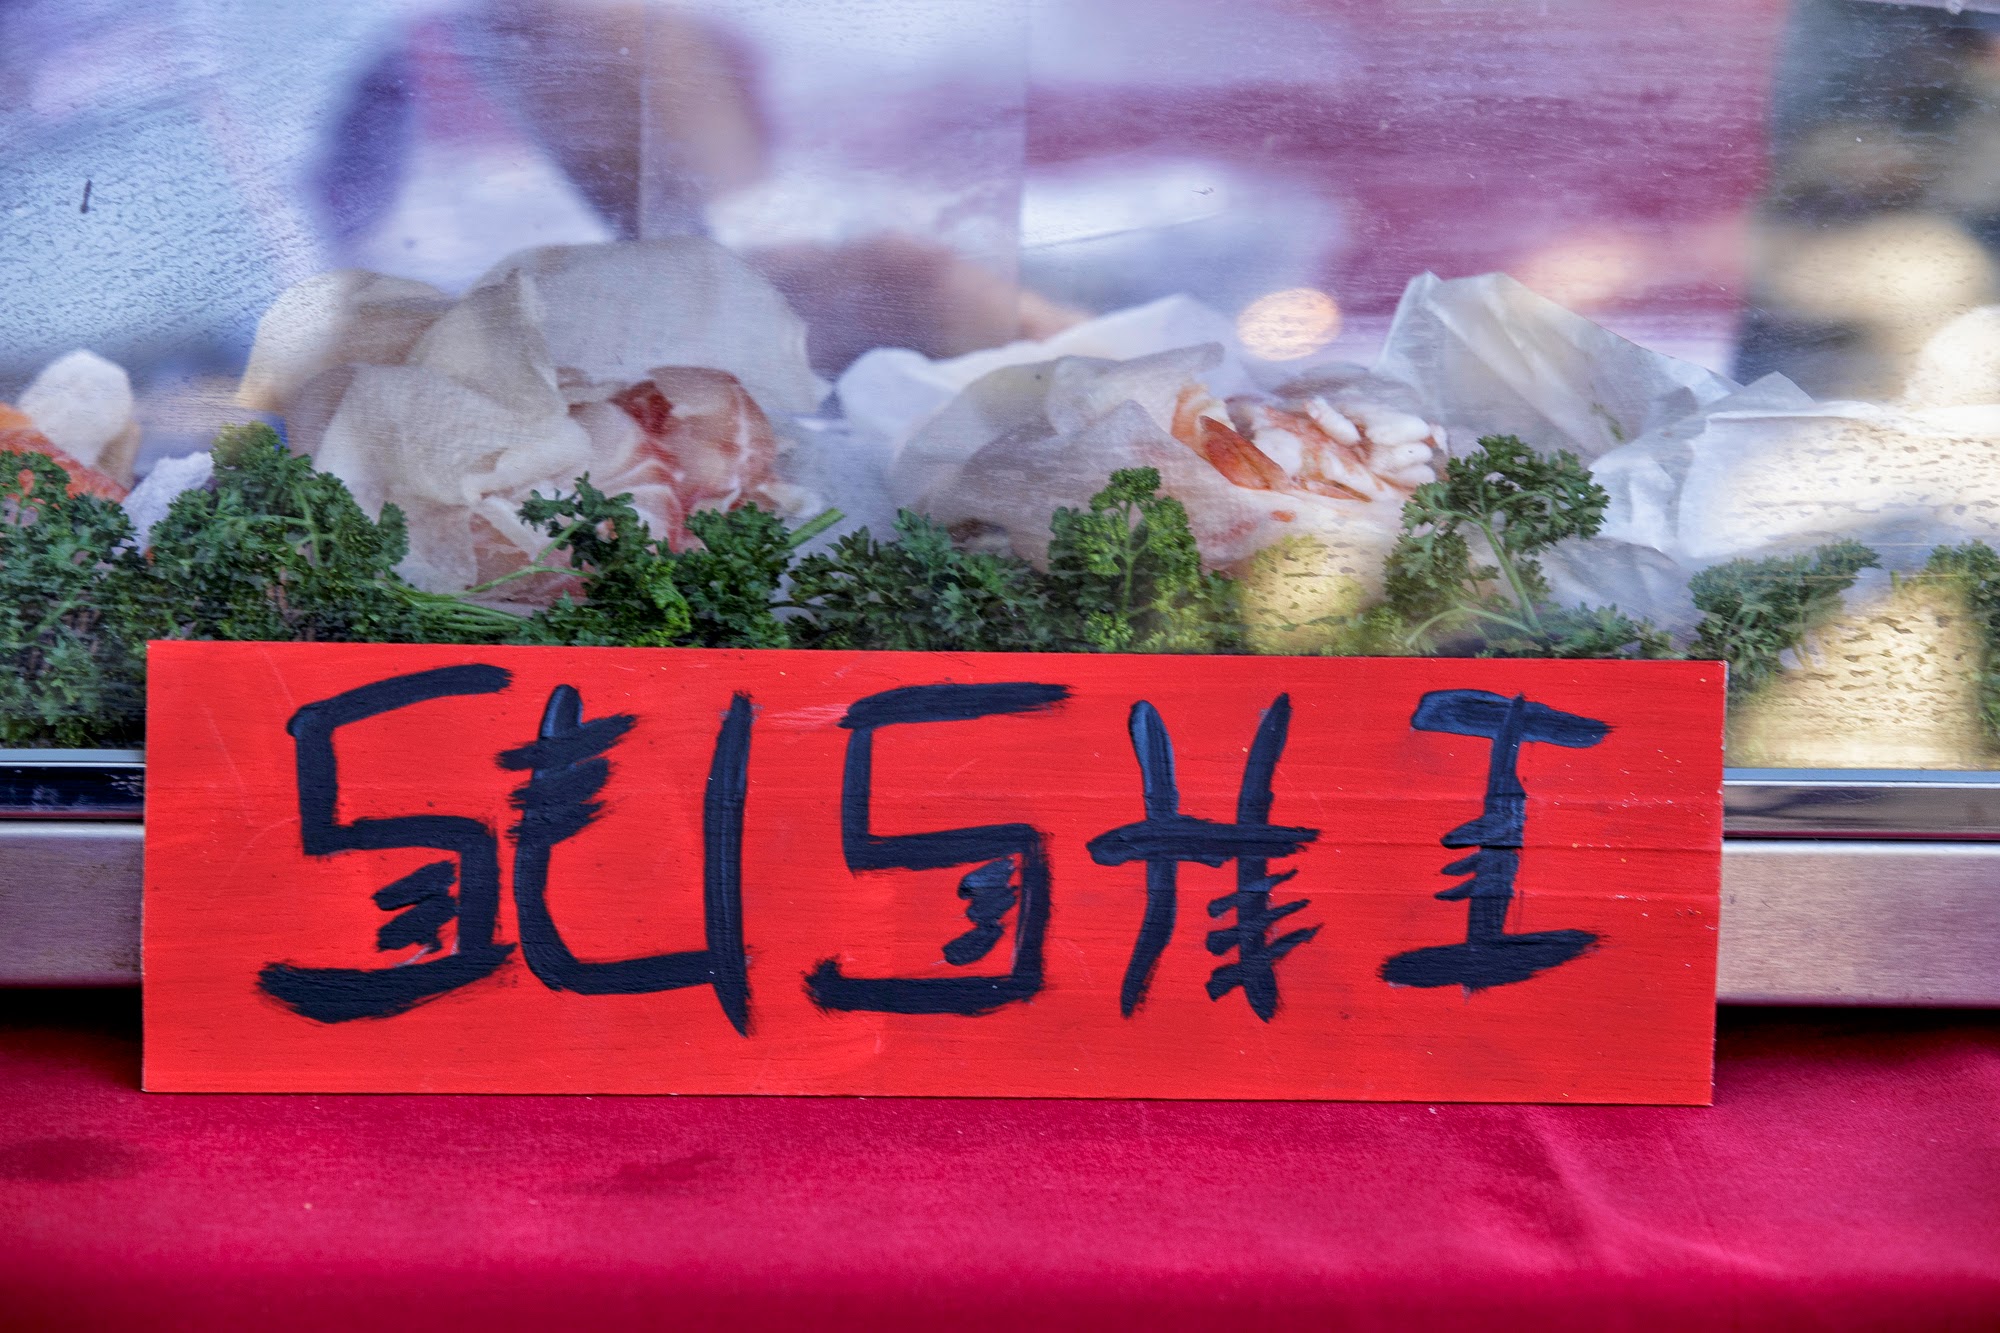 000 - Asian Felici sushi.jpeg